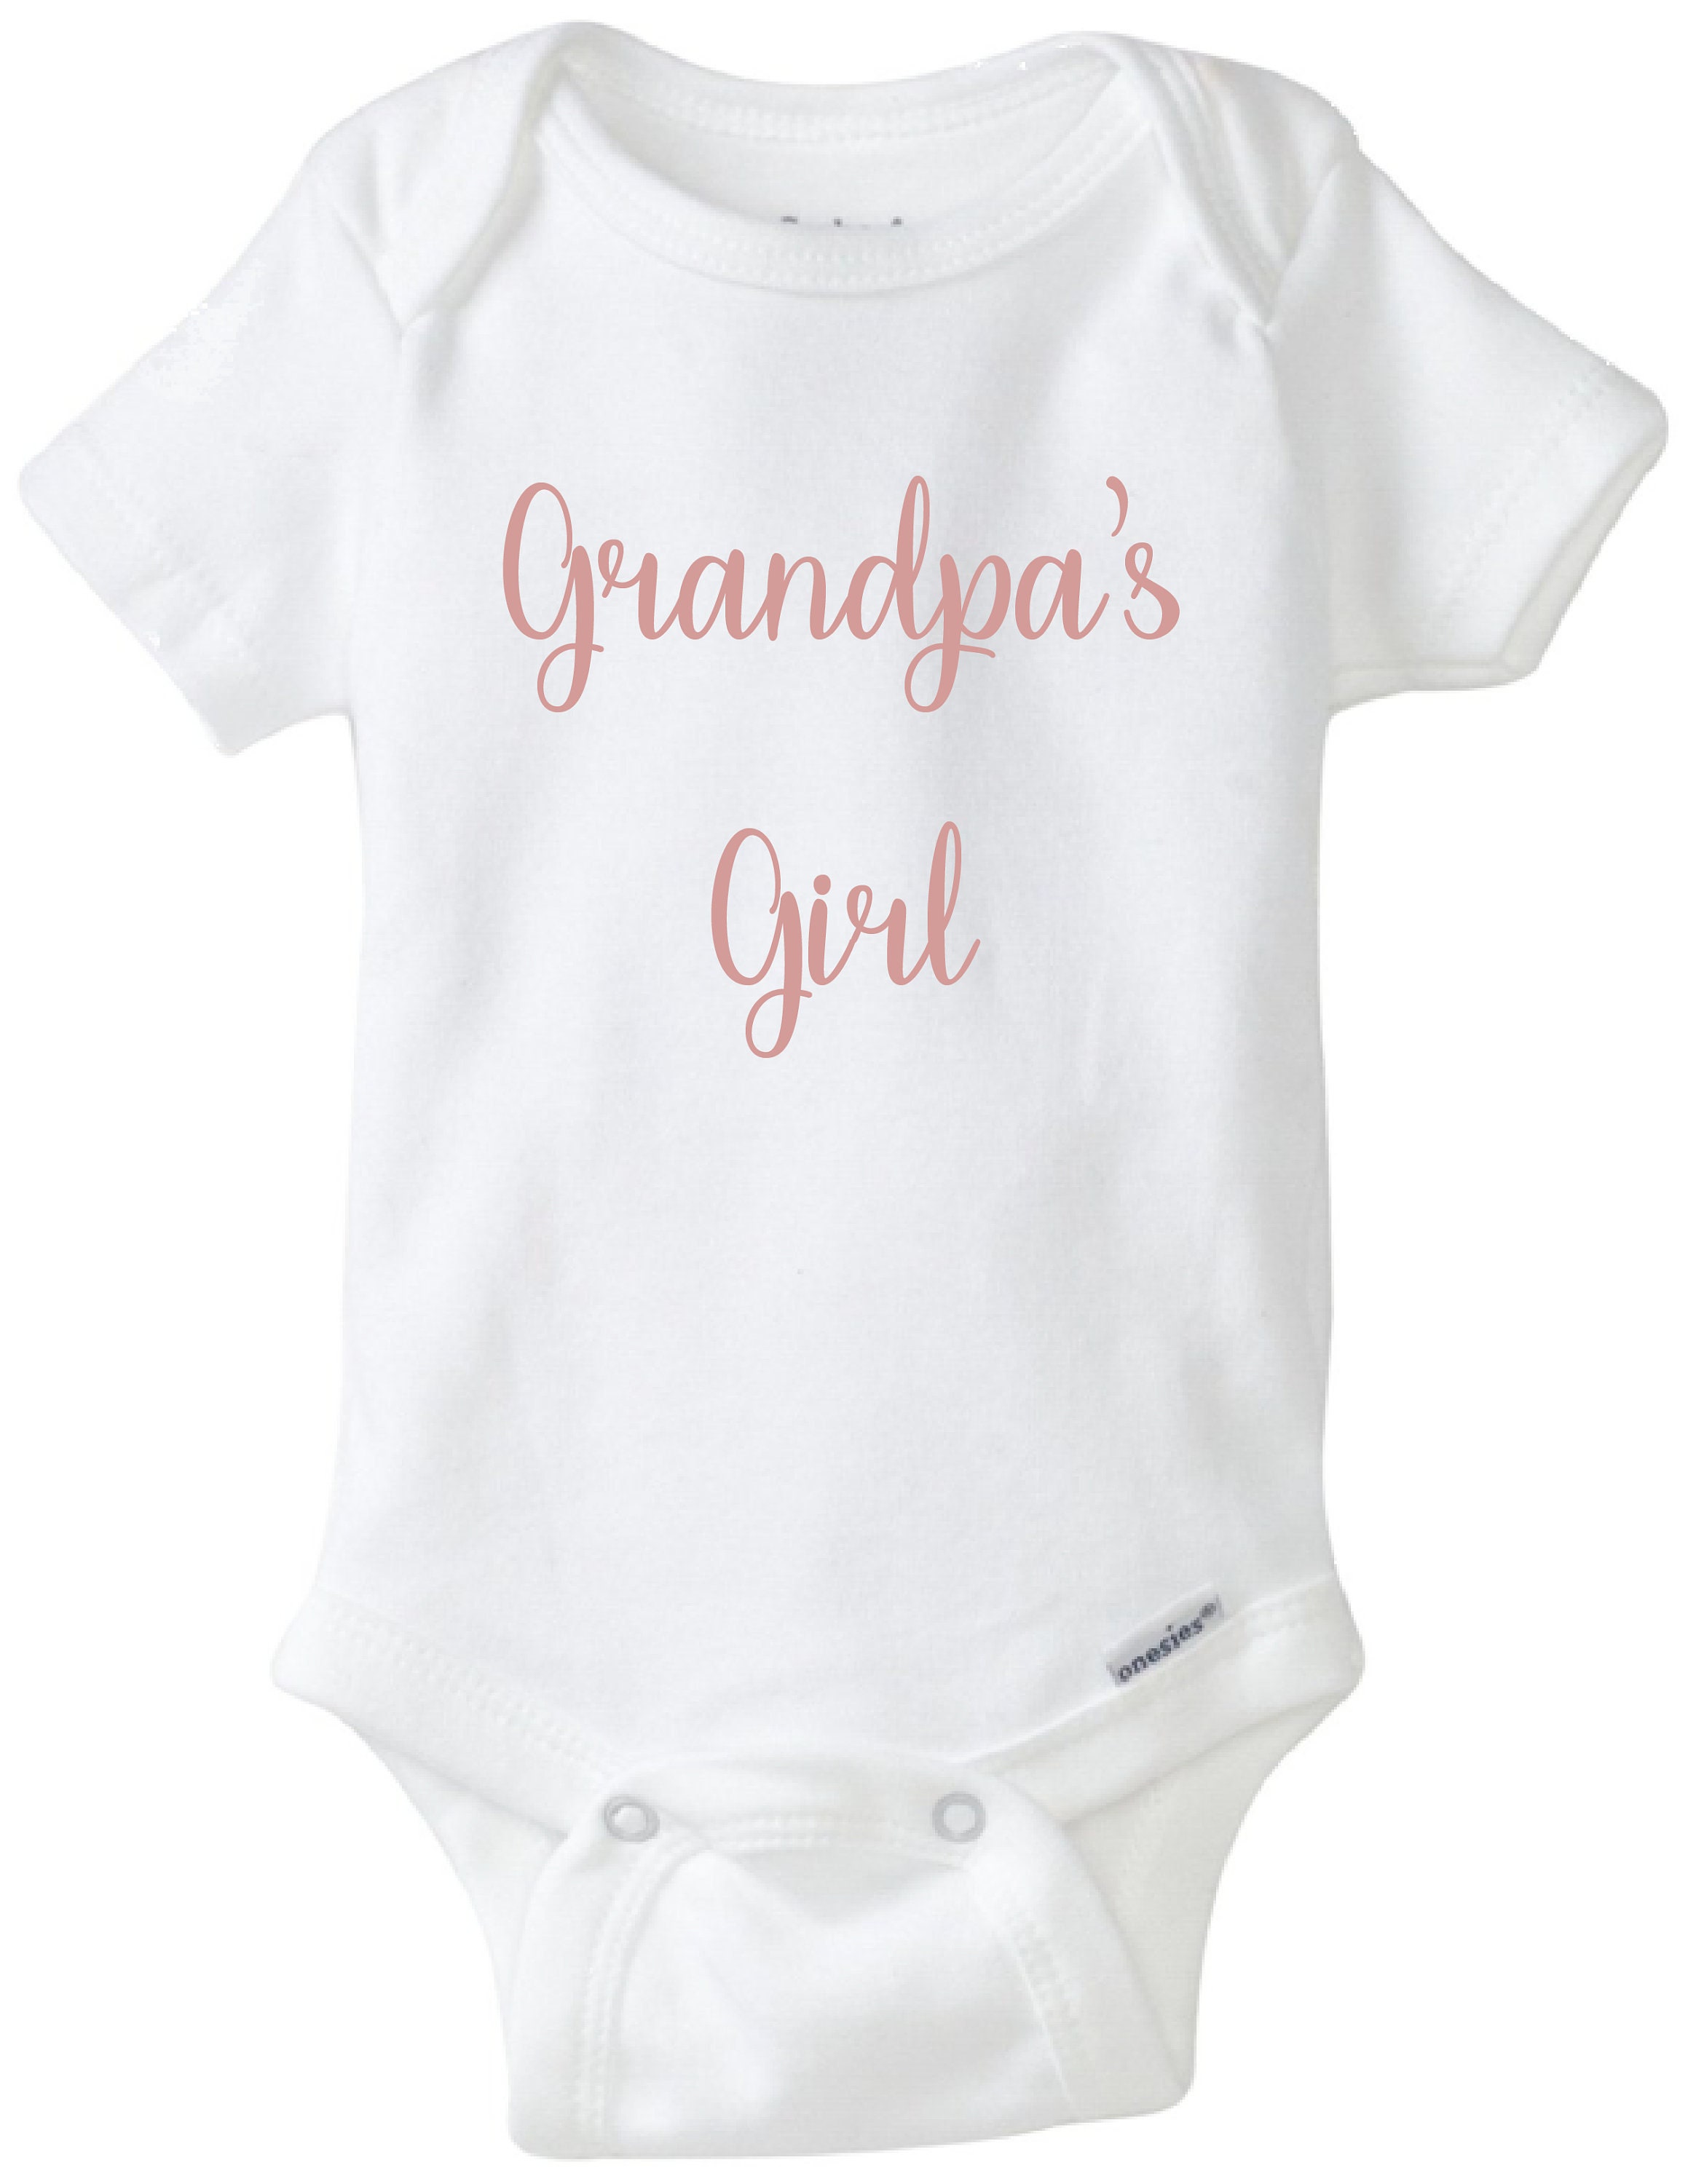 Grandpa's Girl, Grandpa's Girl Baby Onesie, Baby Girl Clothes, Baby Girl  Shirt, Granddaughter Onesie, Grandpas Gift, Newborn-24 Months 